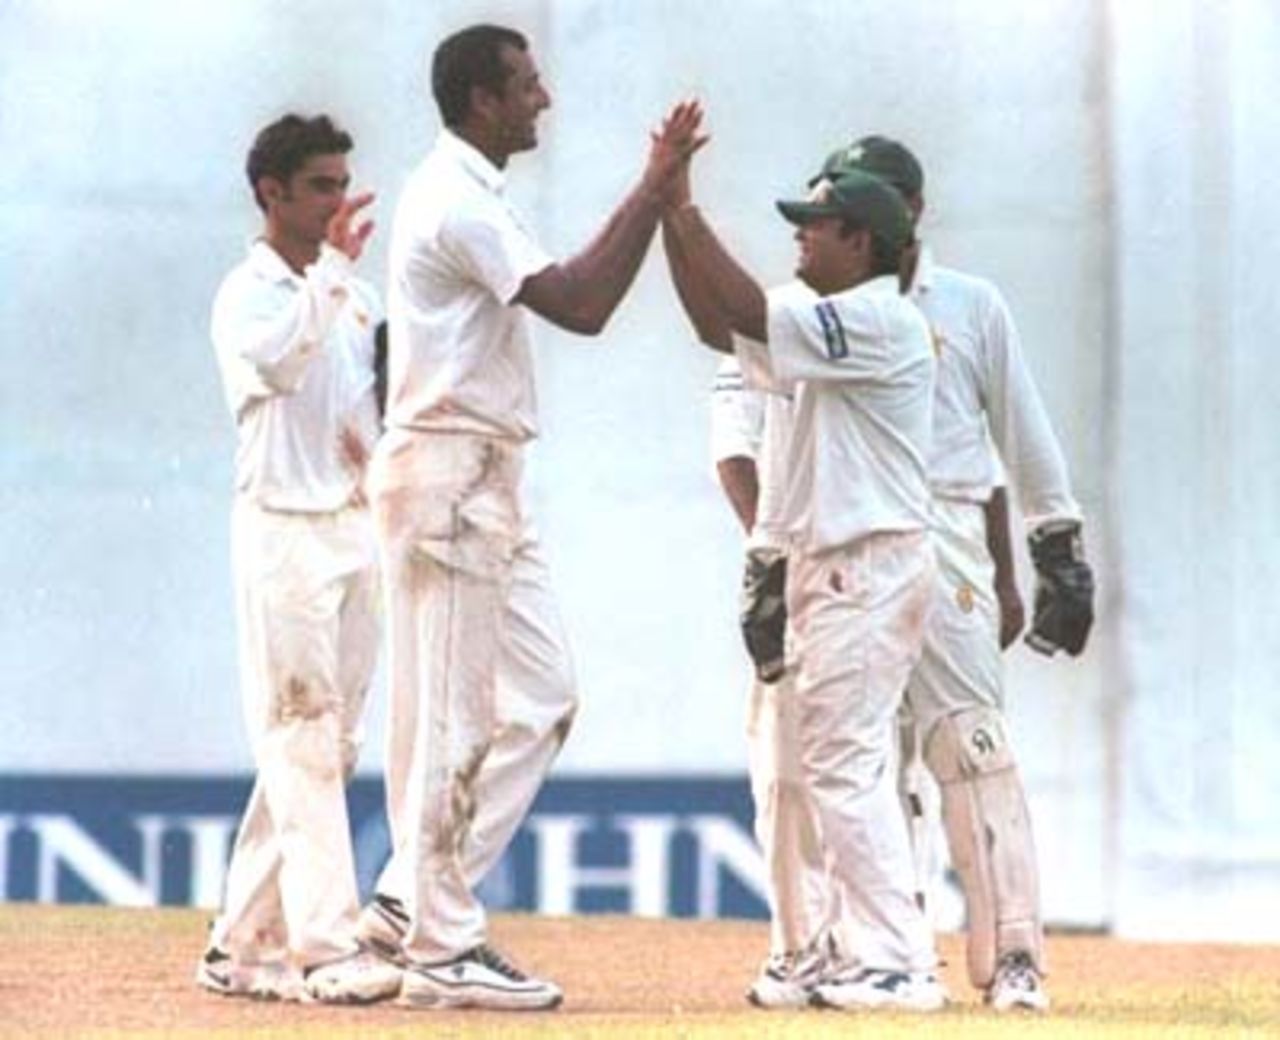 Pakstani bowler Arshad Khan celebrates with teammates during the second day of the third cricket Test against Pakistan in Asgiriya International cricket stadium in Kandy, Sri Lanka on Thursday, June. 29, 2000